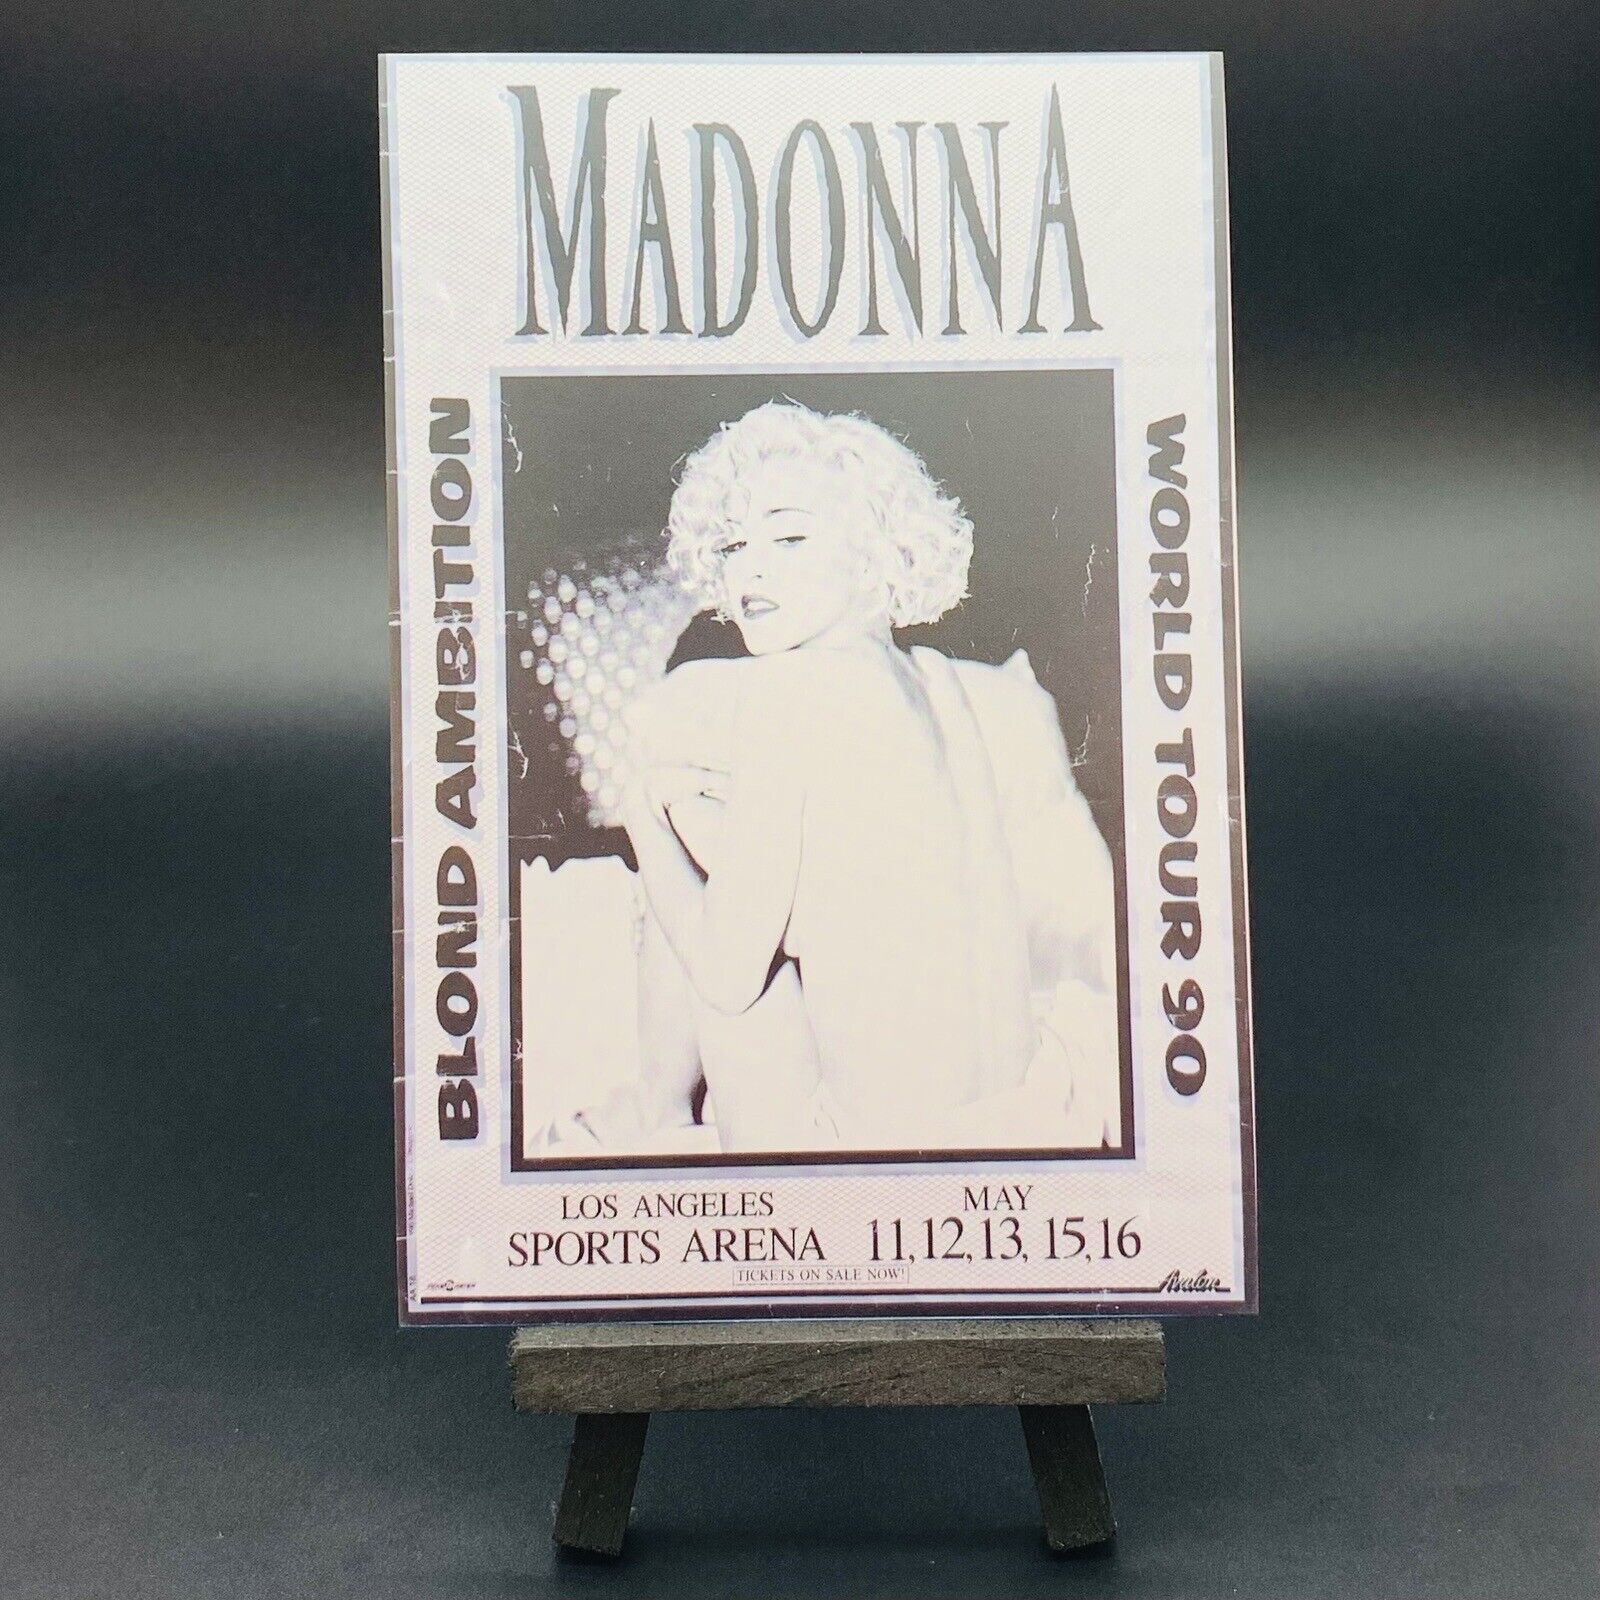 Madonna Blond Ambition World Tour 90 Concert 4 x 6 Trading Poster Card Wall Art